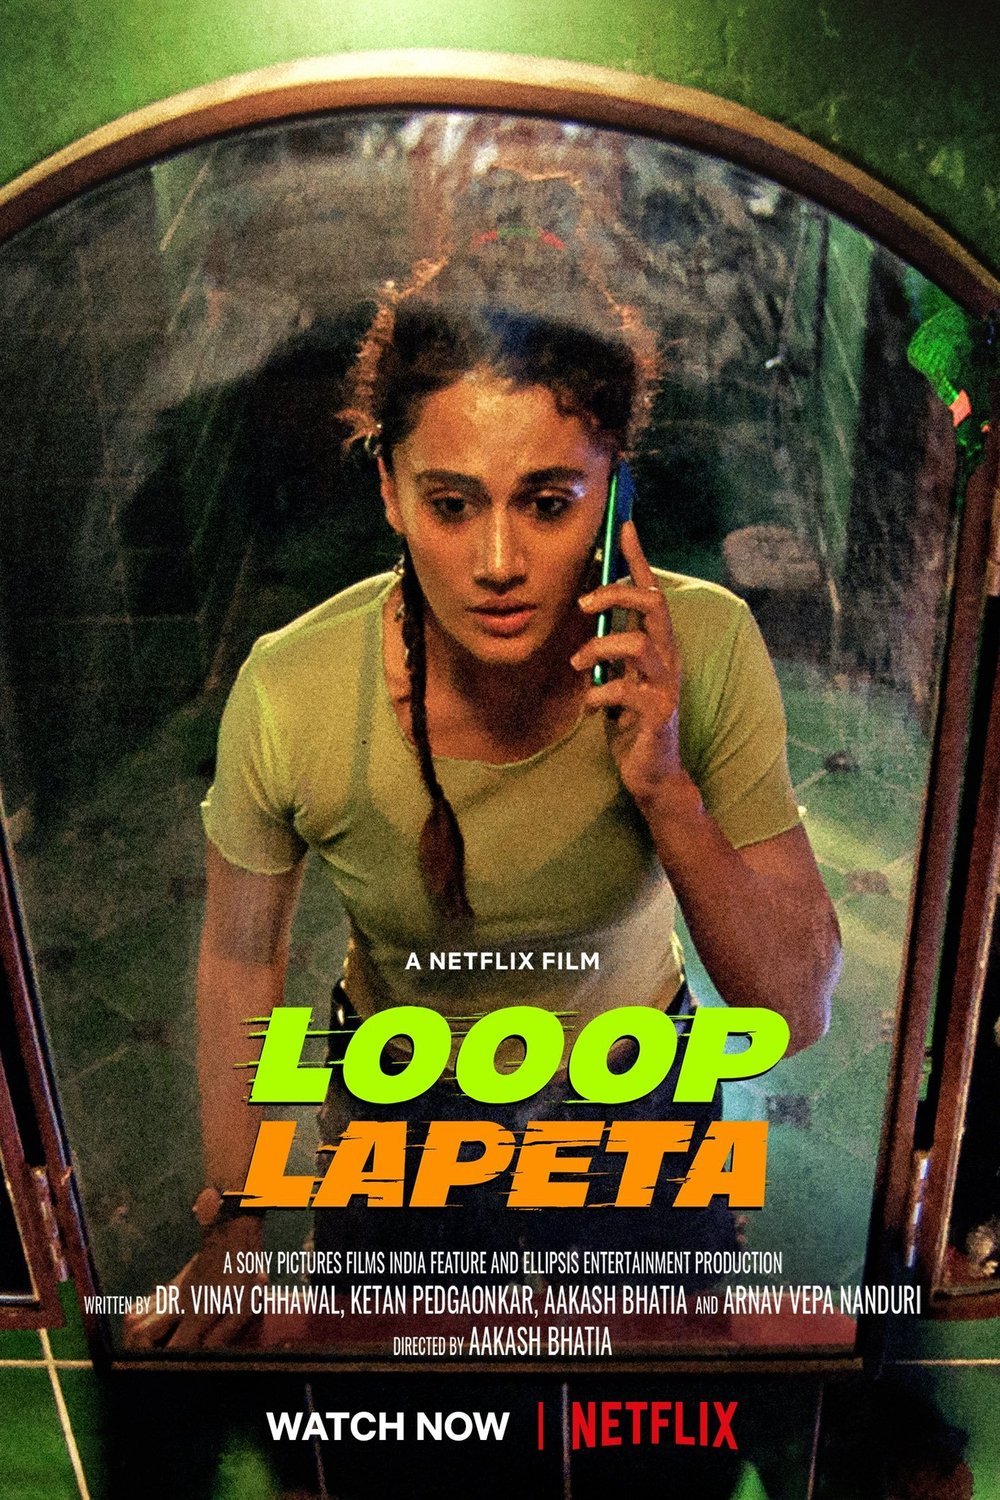 L'affiche originale du film Looop Lapeta en Hindi